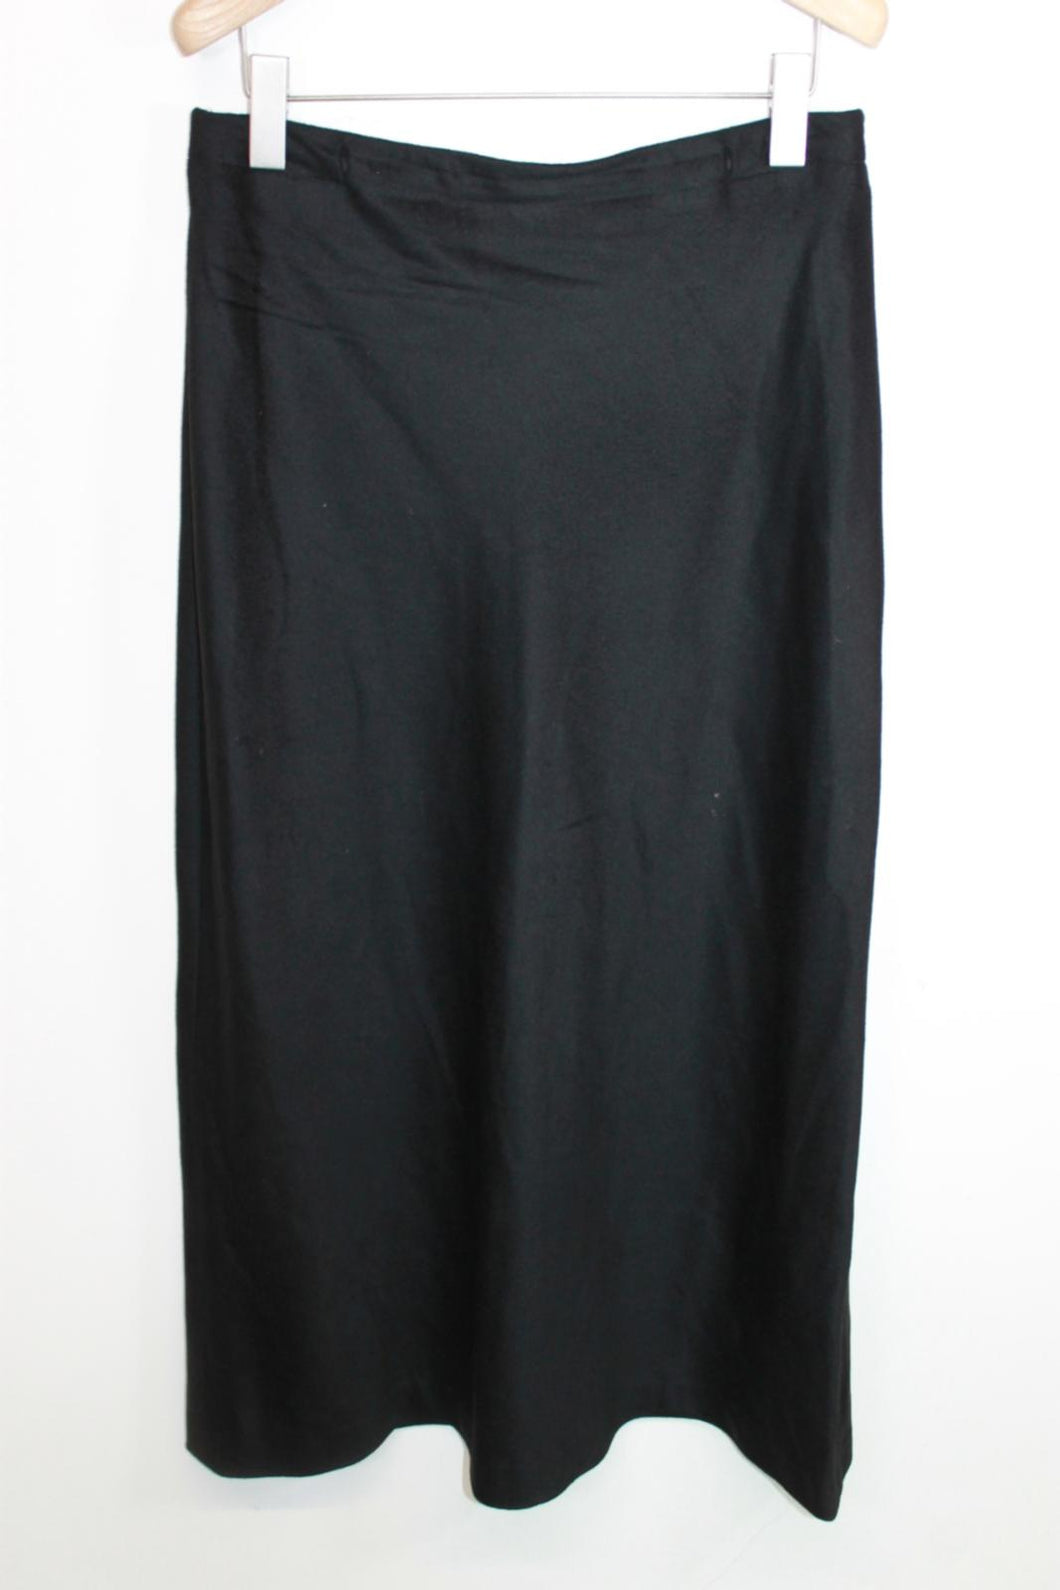 NICOLE FARHI Ladies Black Wool Long Maxi Skirt EU42 UK14